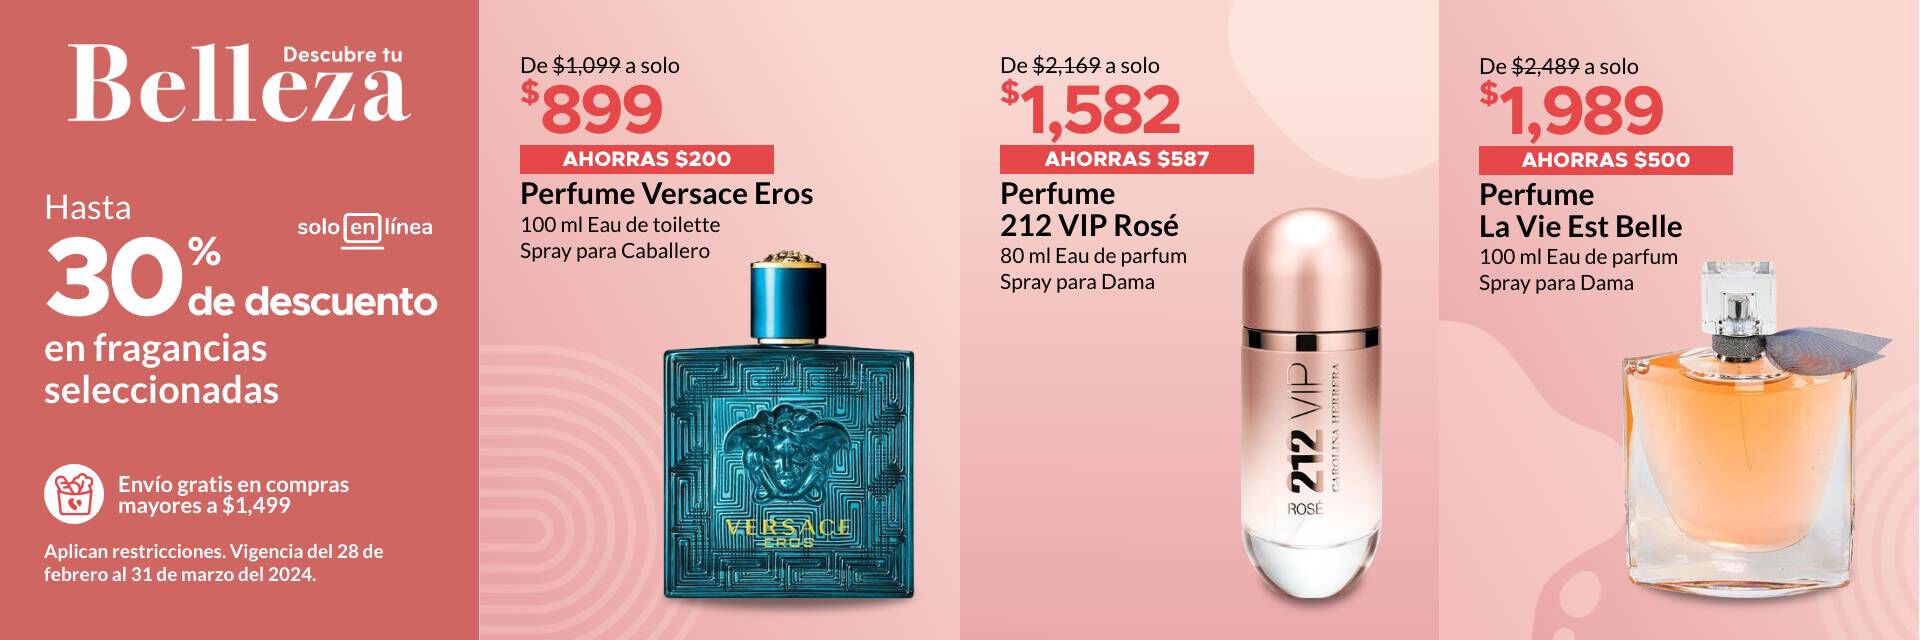 Banner Promocional Perfumes